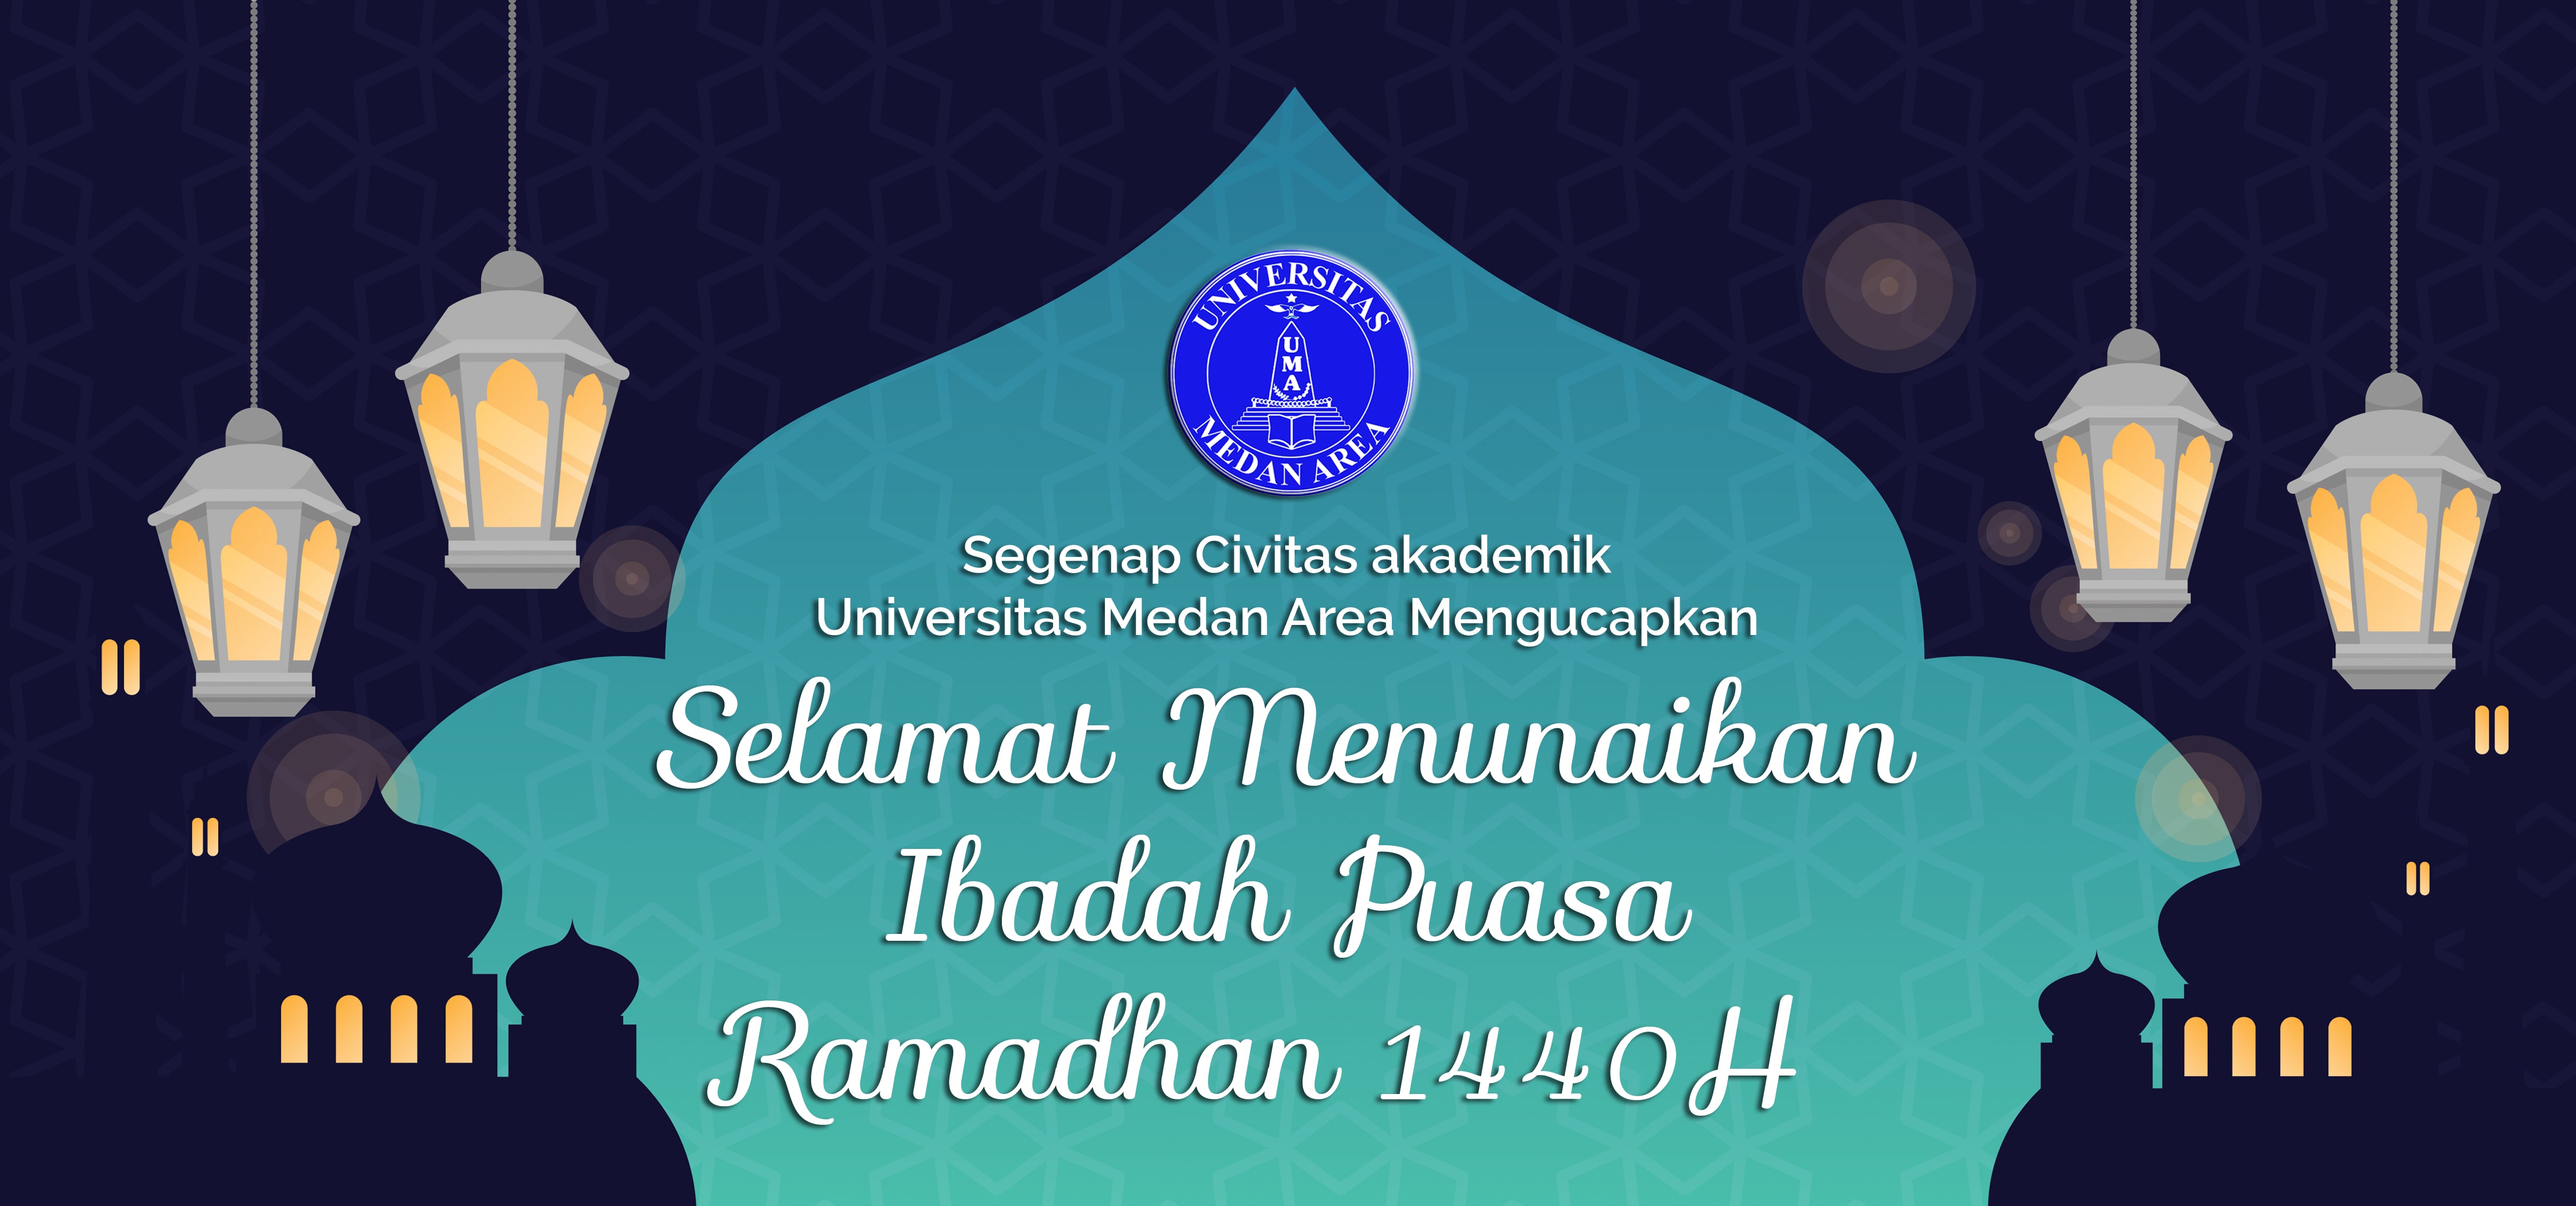 Segenap Civitas Akademika Universitas Medan Area Mengucapkan Selamat Menunaikan Ibadah Puasa Ramadhan 1440 H